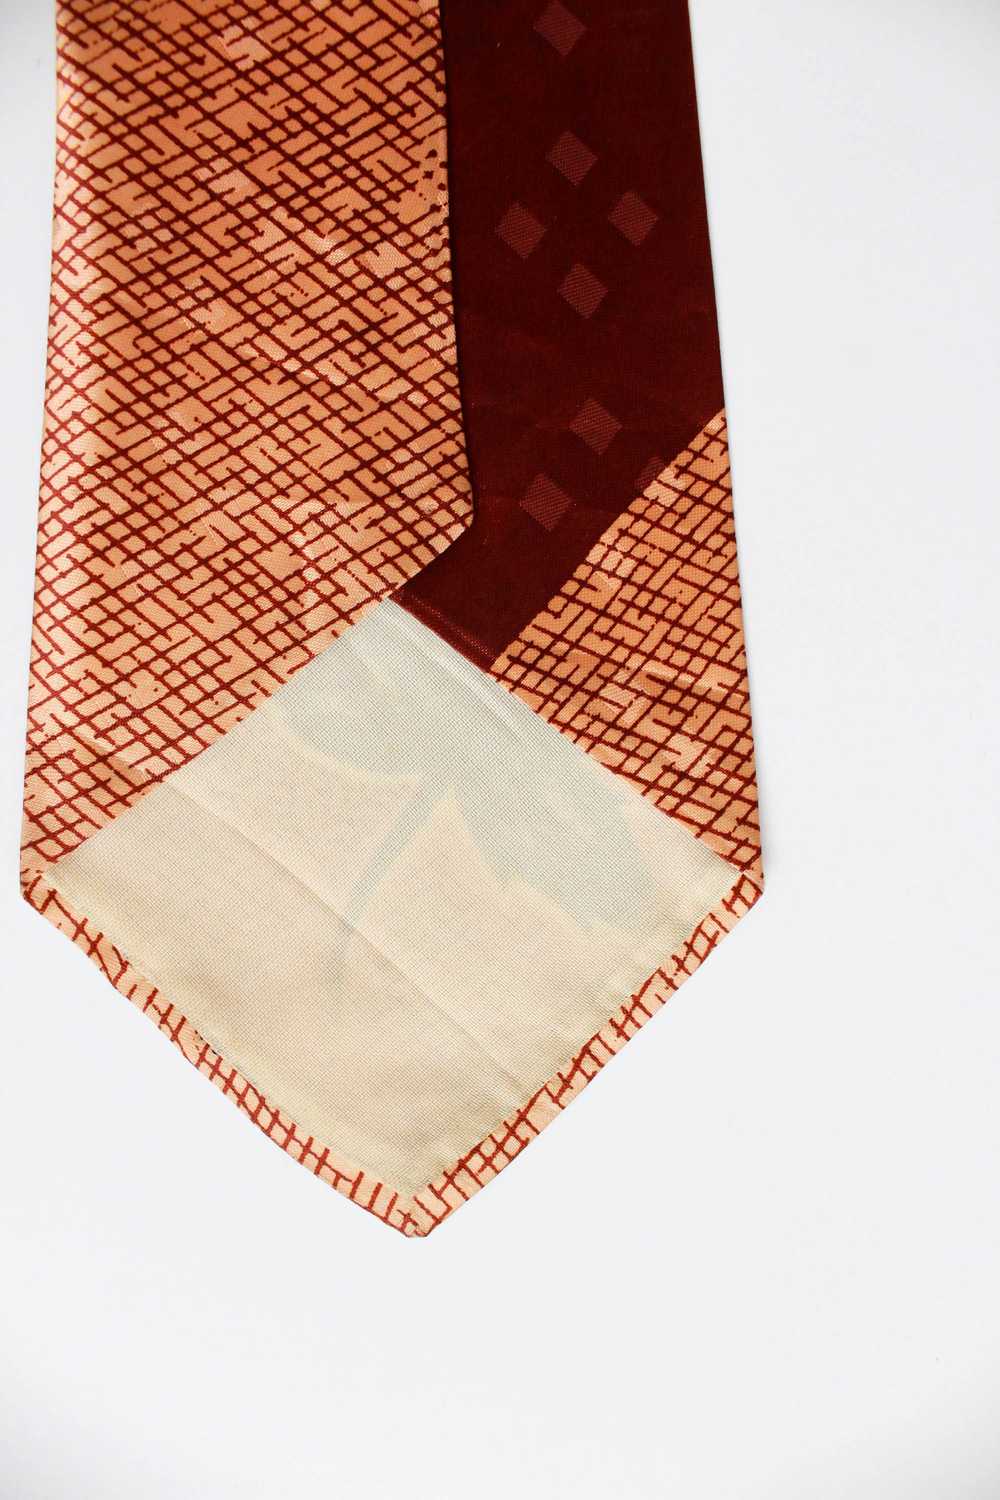 1940s Three Leaf Print Rayon Necktie - image 9